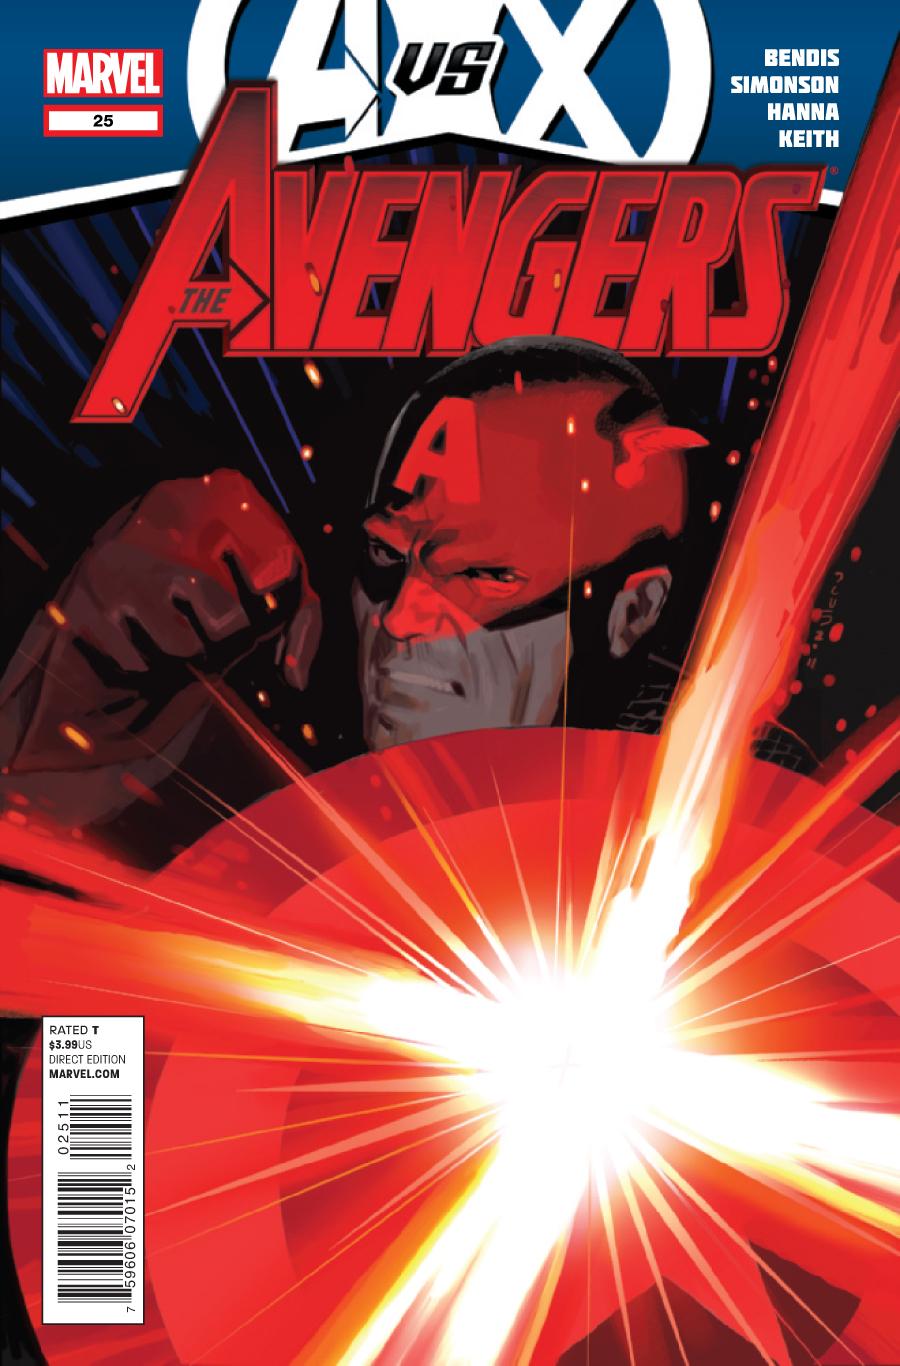 The Avengers Vol. 4 #25